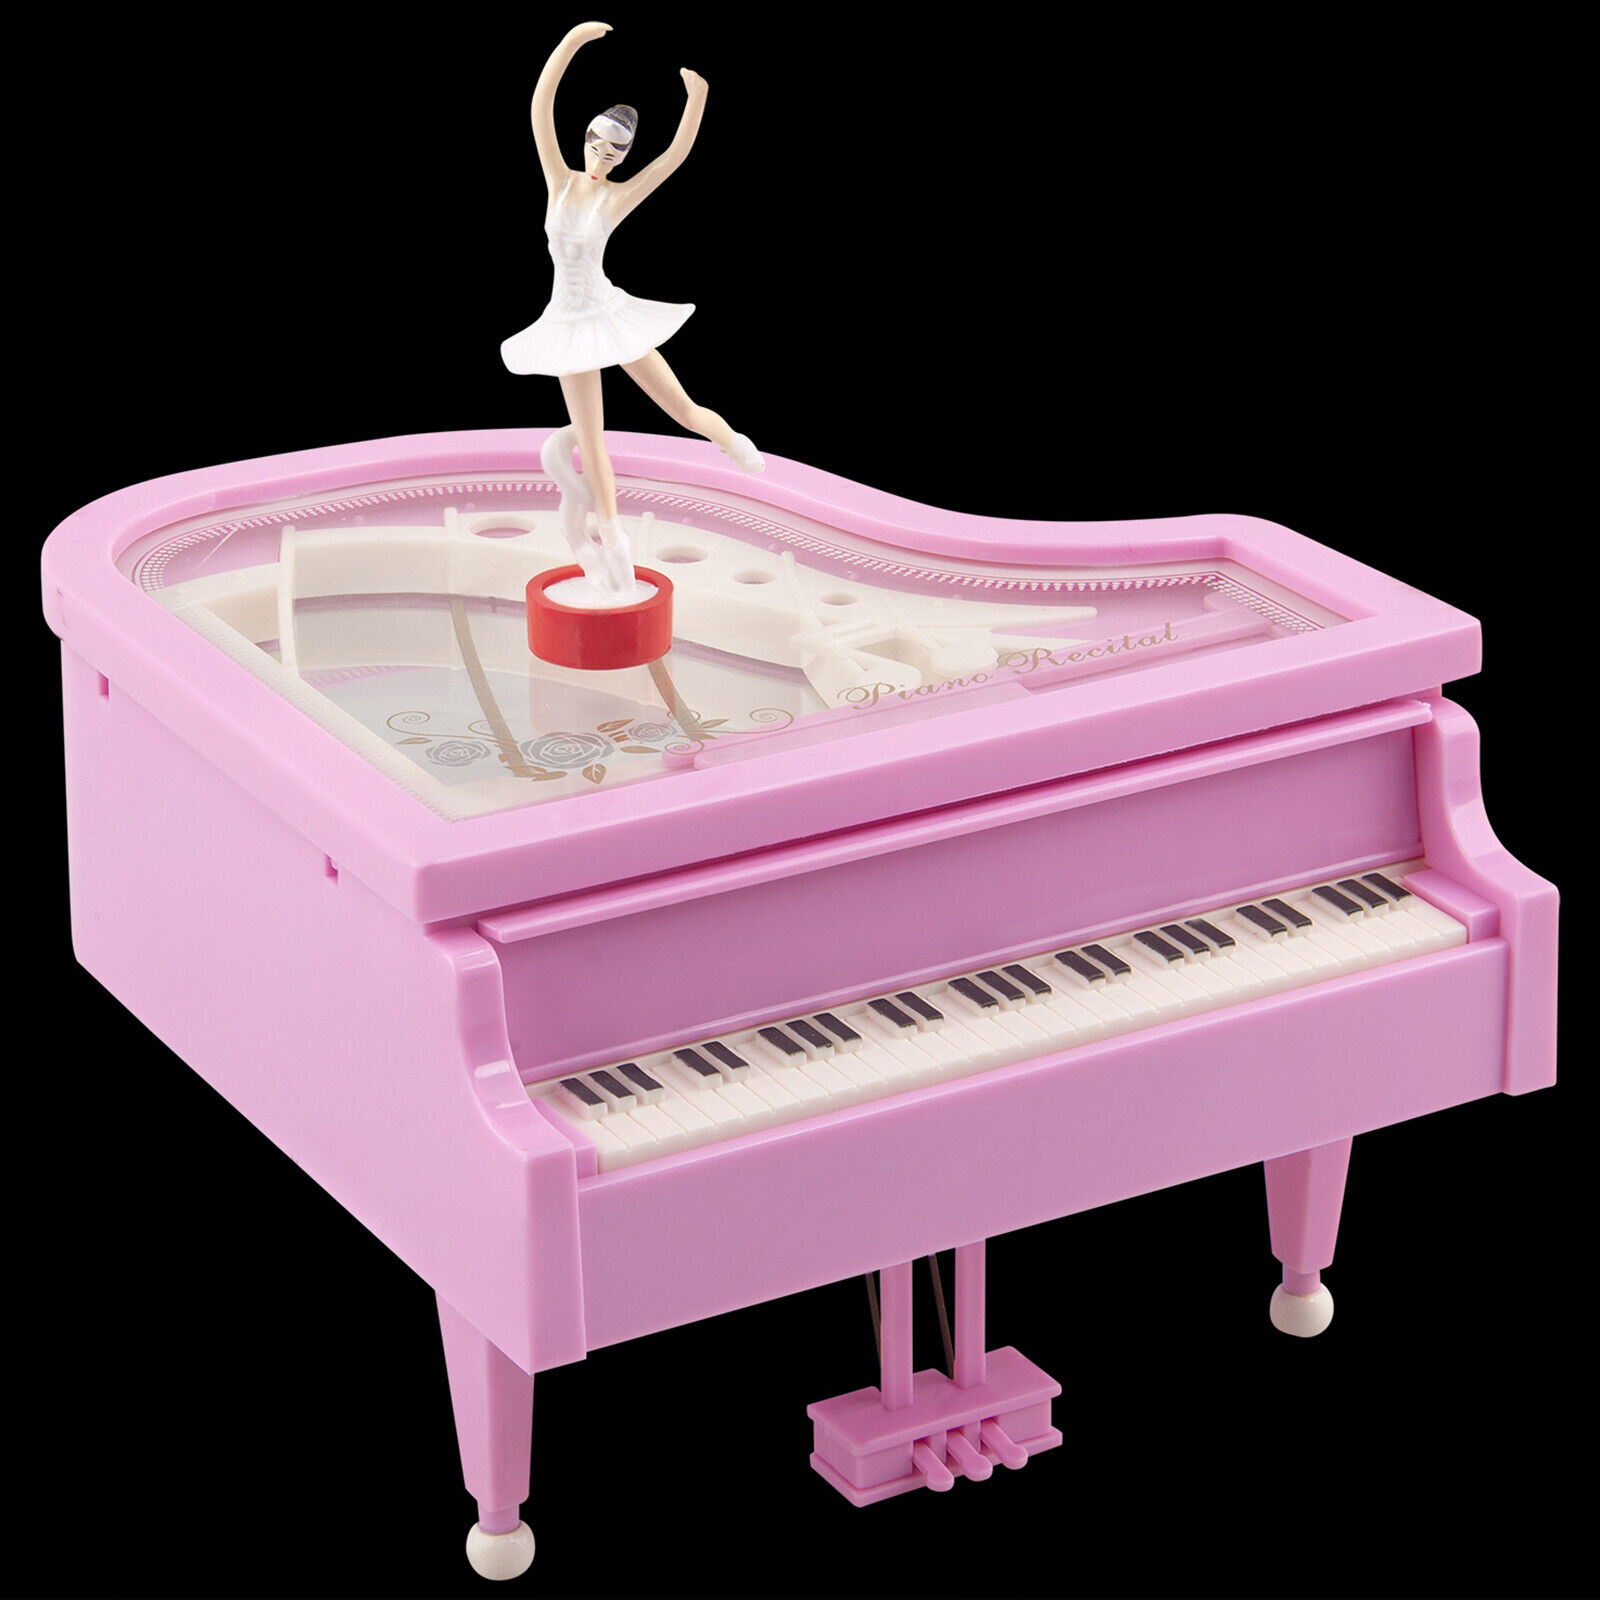 Ballerina Girl Dancing on The Piano Music Box Vintage Style Retro Clockwork Gift